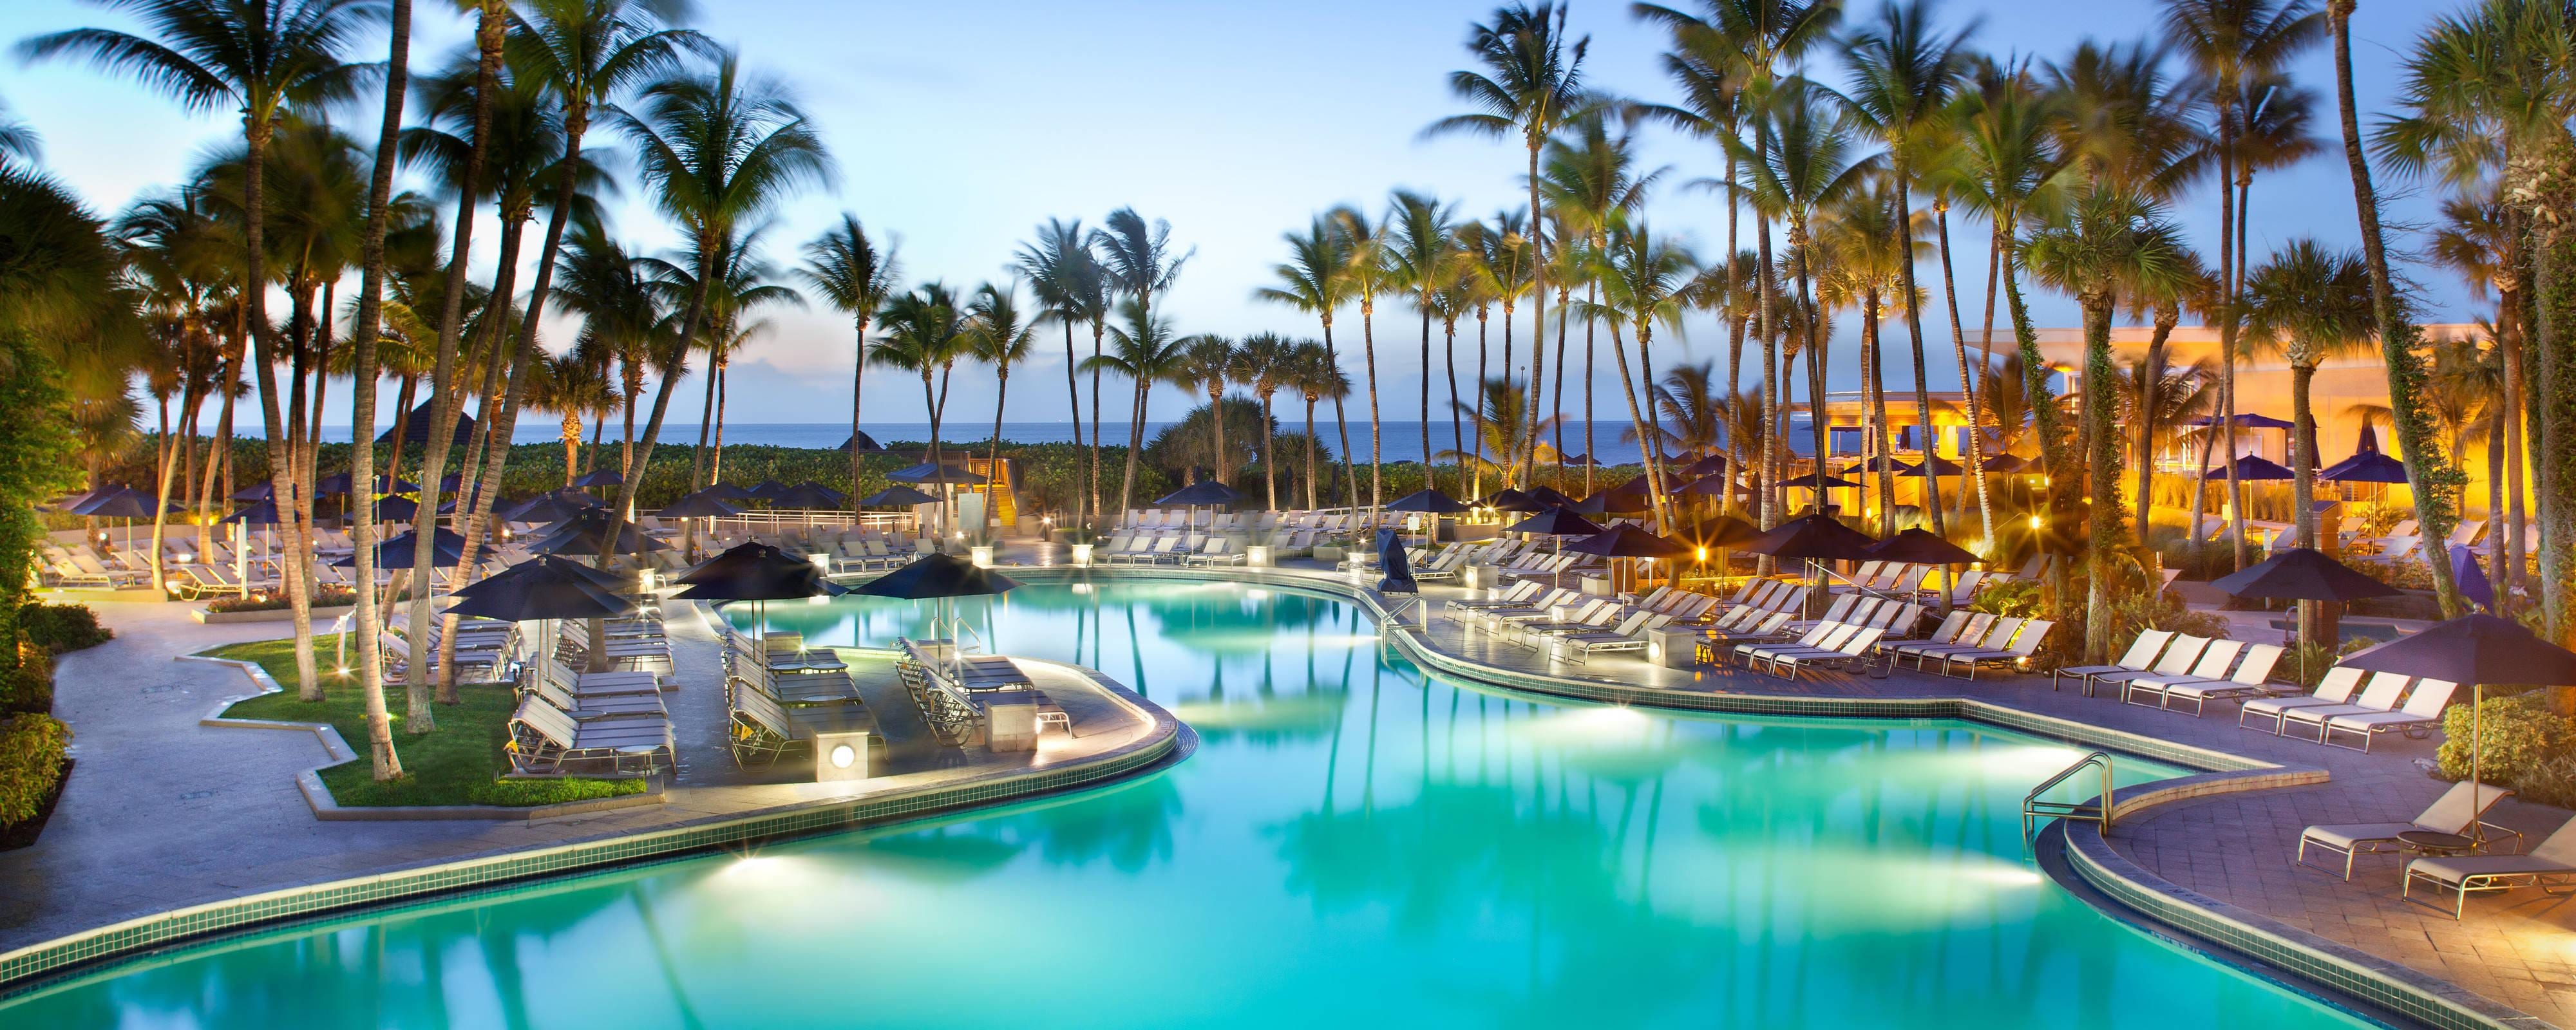 Fort Lauderdale Hotel with Pool | Fort Lauderdale Marriott Harbor Beach